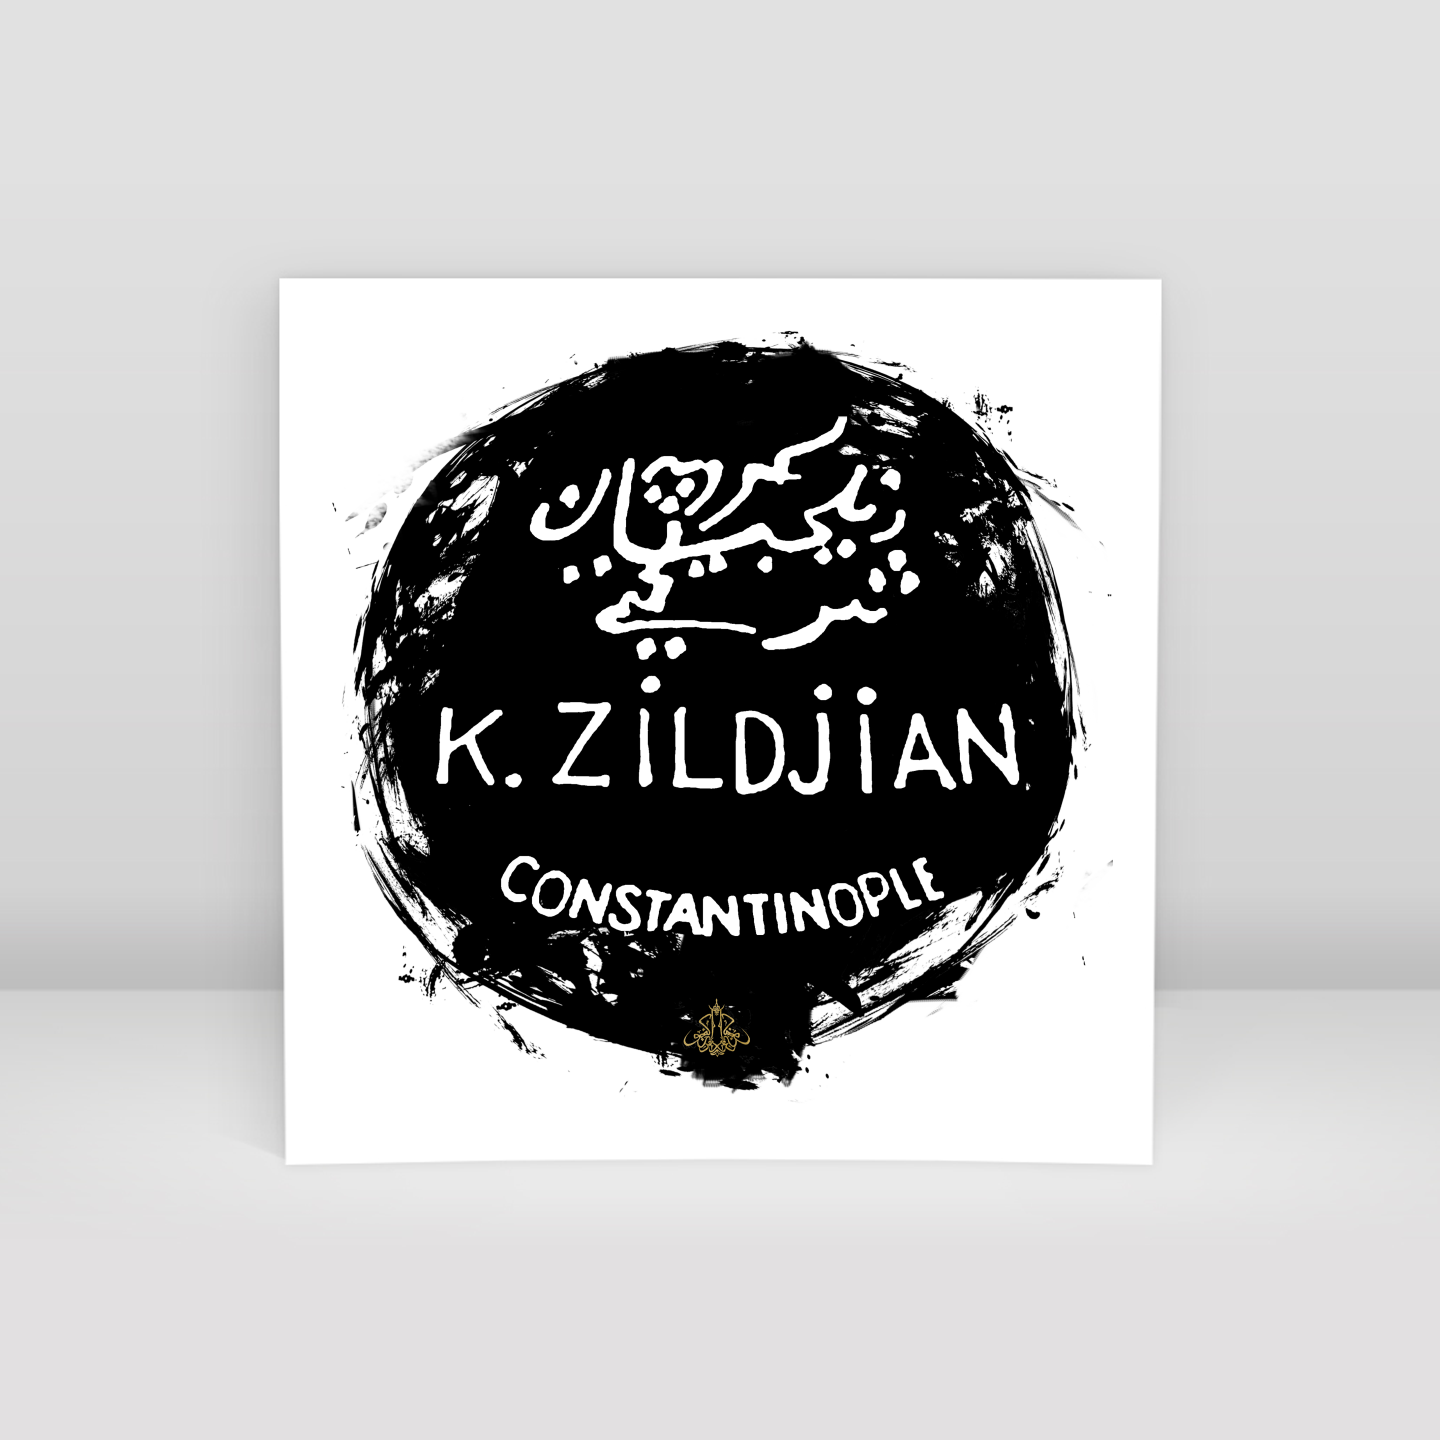 Zildjian Constantinople - Art Print